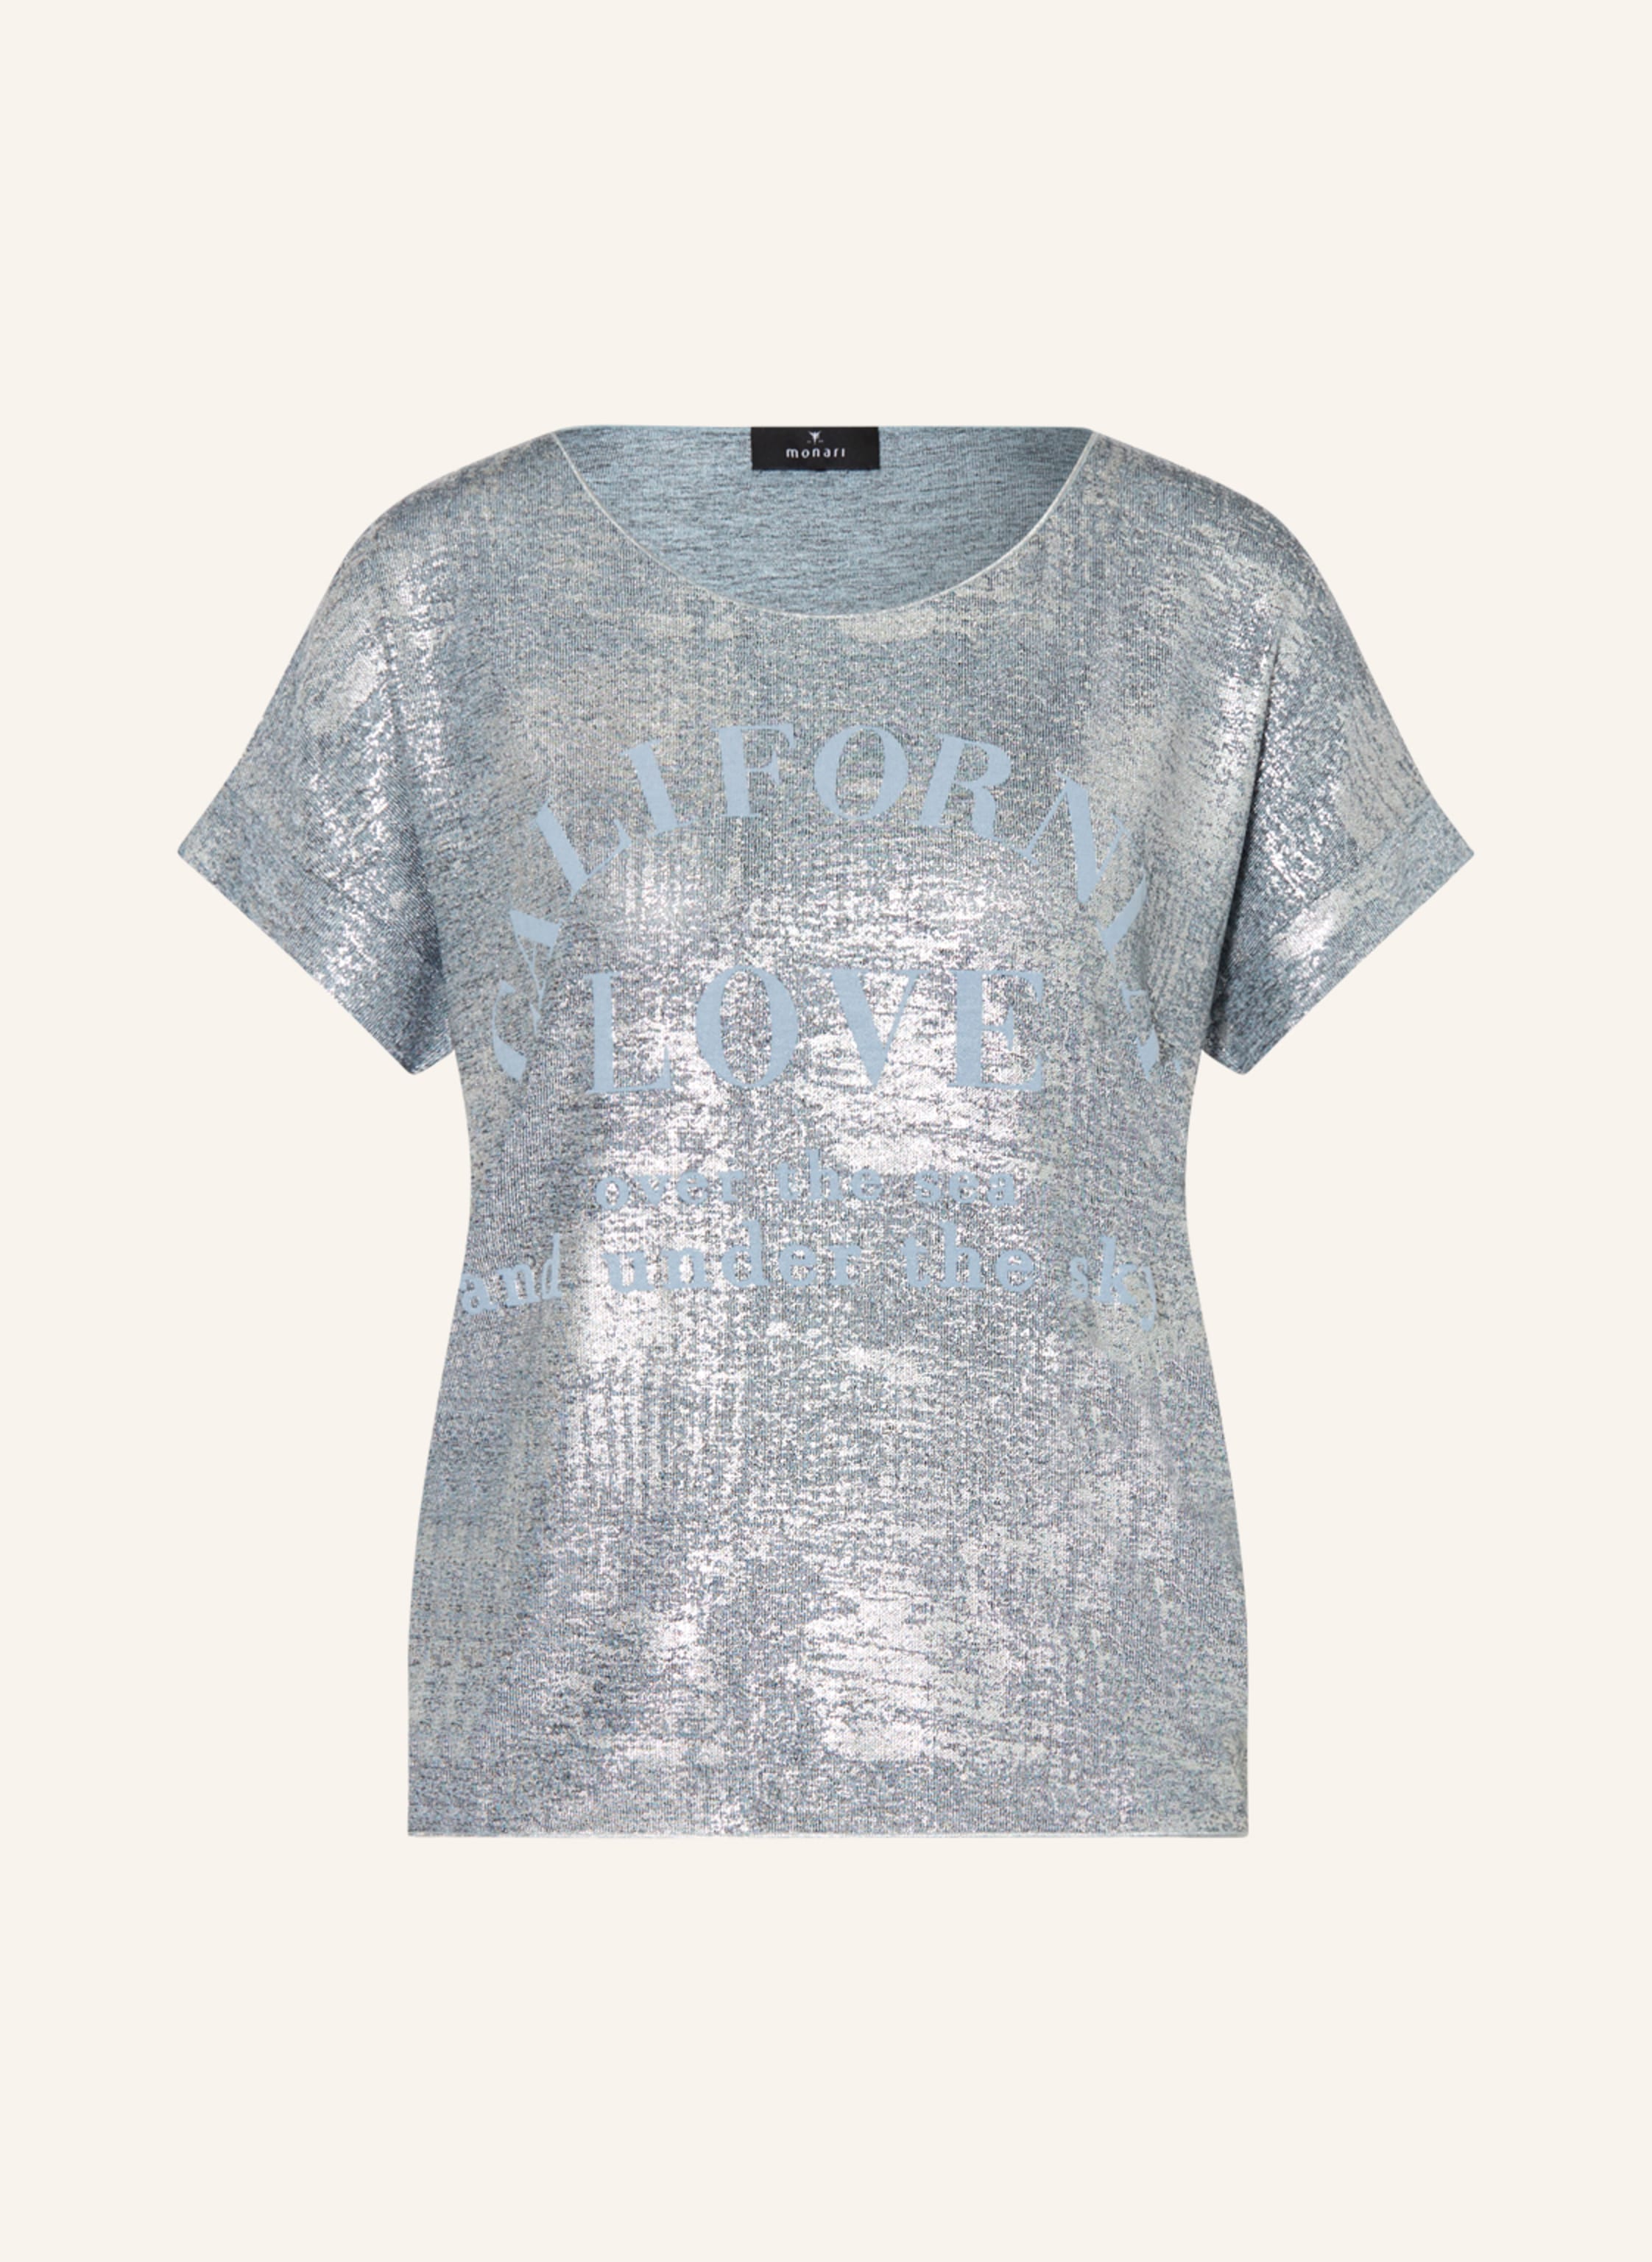 monari mit blaugrau/ Glitzergarn silber in T-Shirt